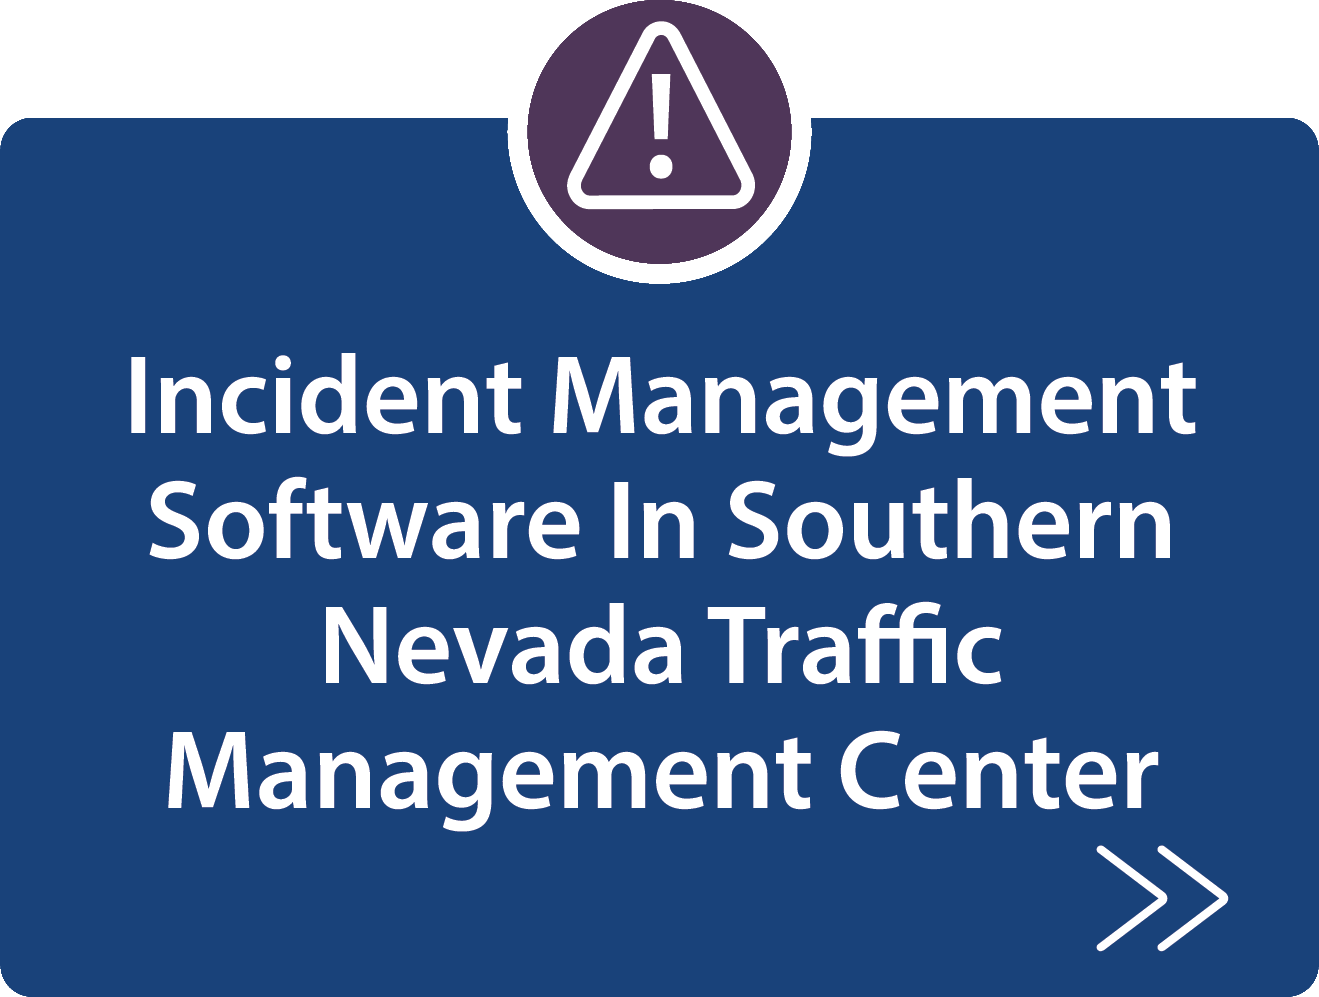 Incident management Software in Southern Nevada Traffic Management Center description 